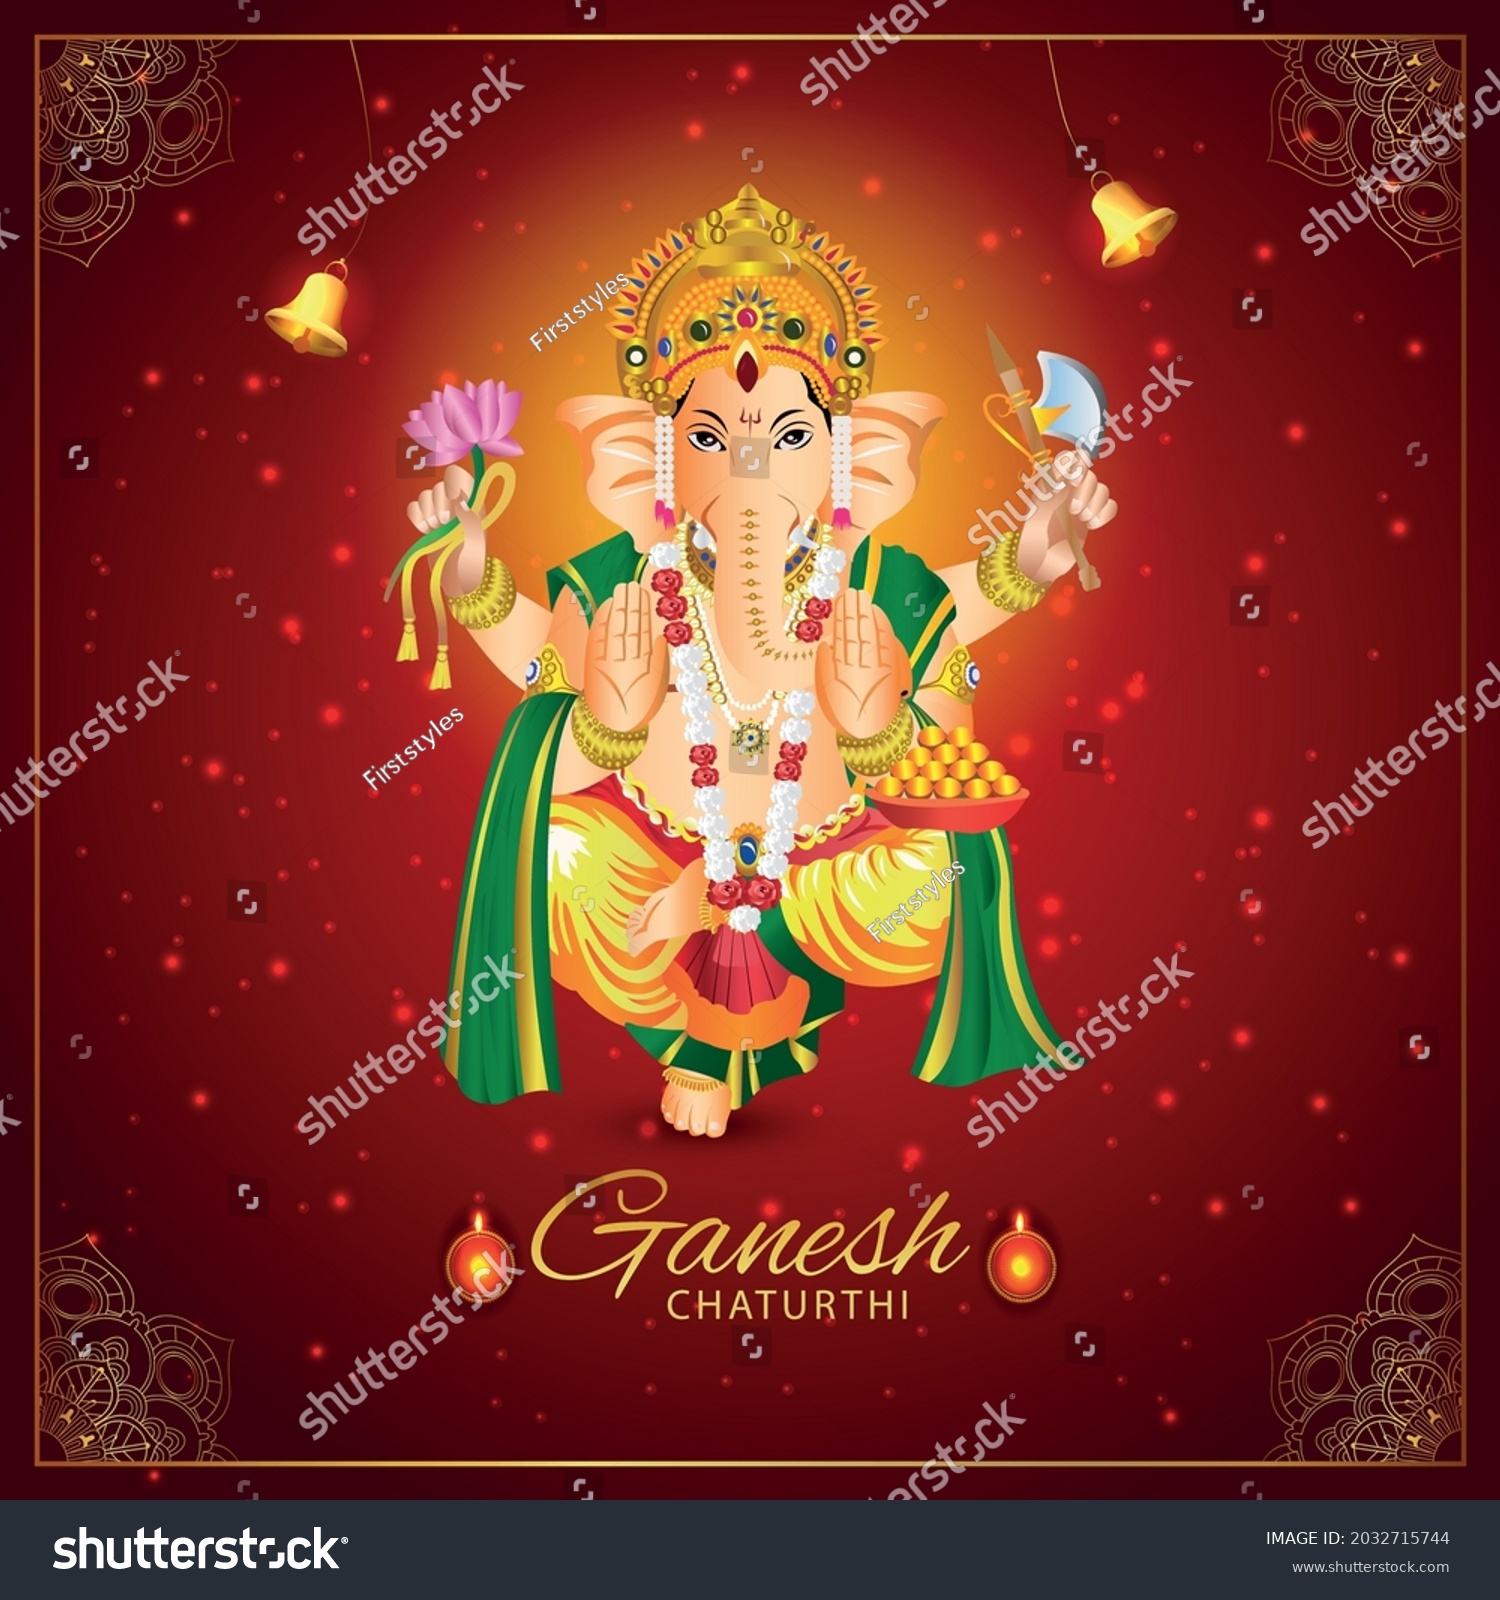 Indian Festival Happy Ganesh Chaturthi Invitation Stock Vector Royalty Free 2032715744 2320